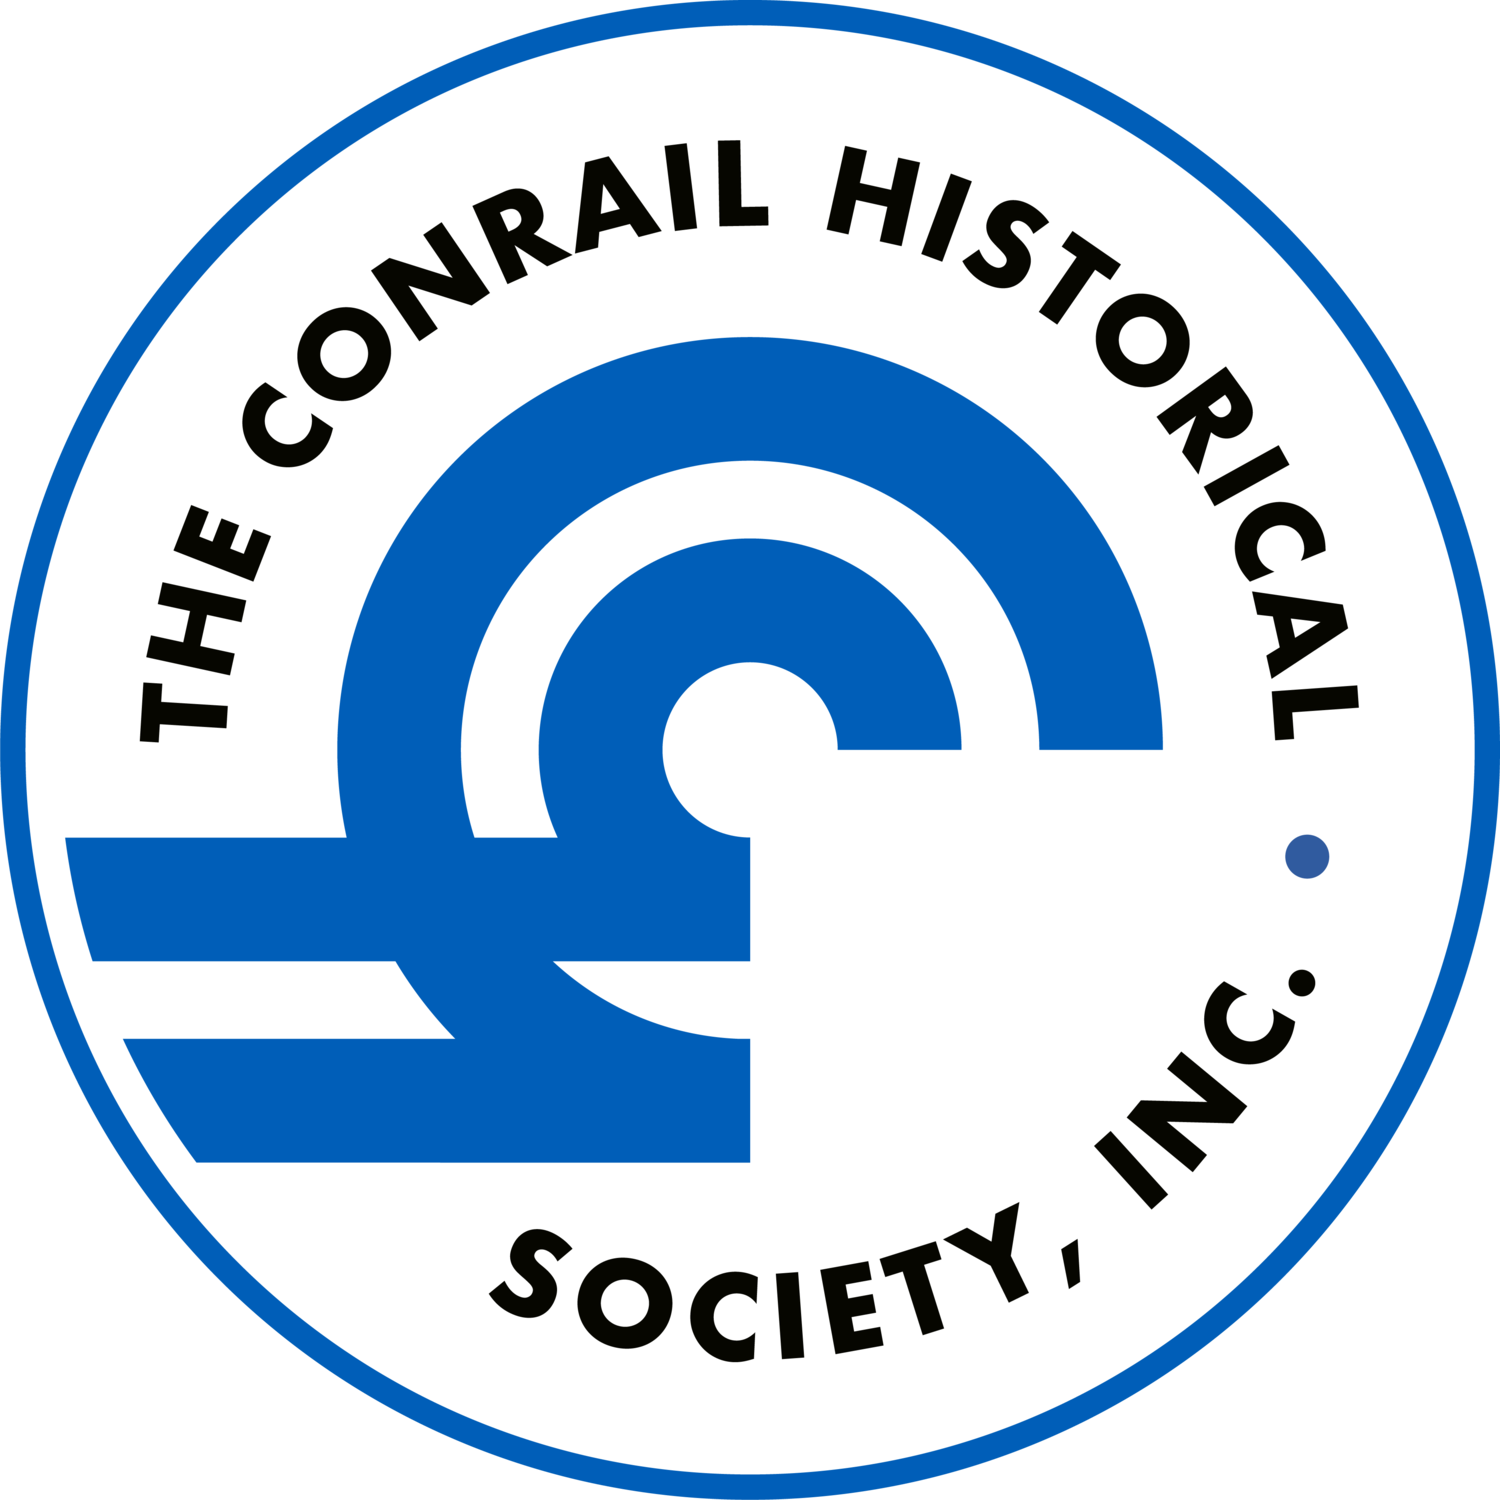 The Conrail Historical Society